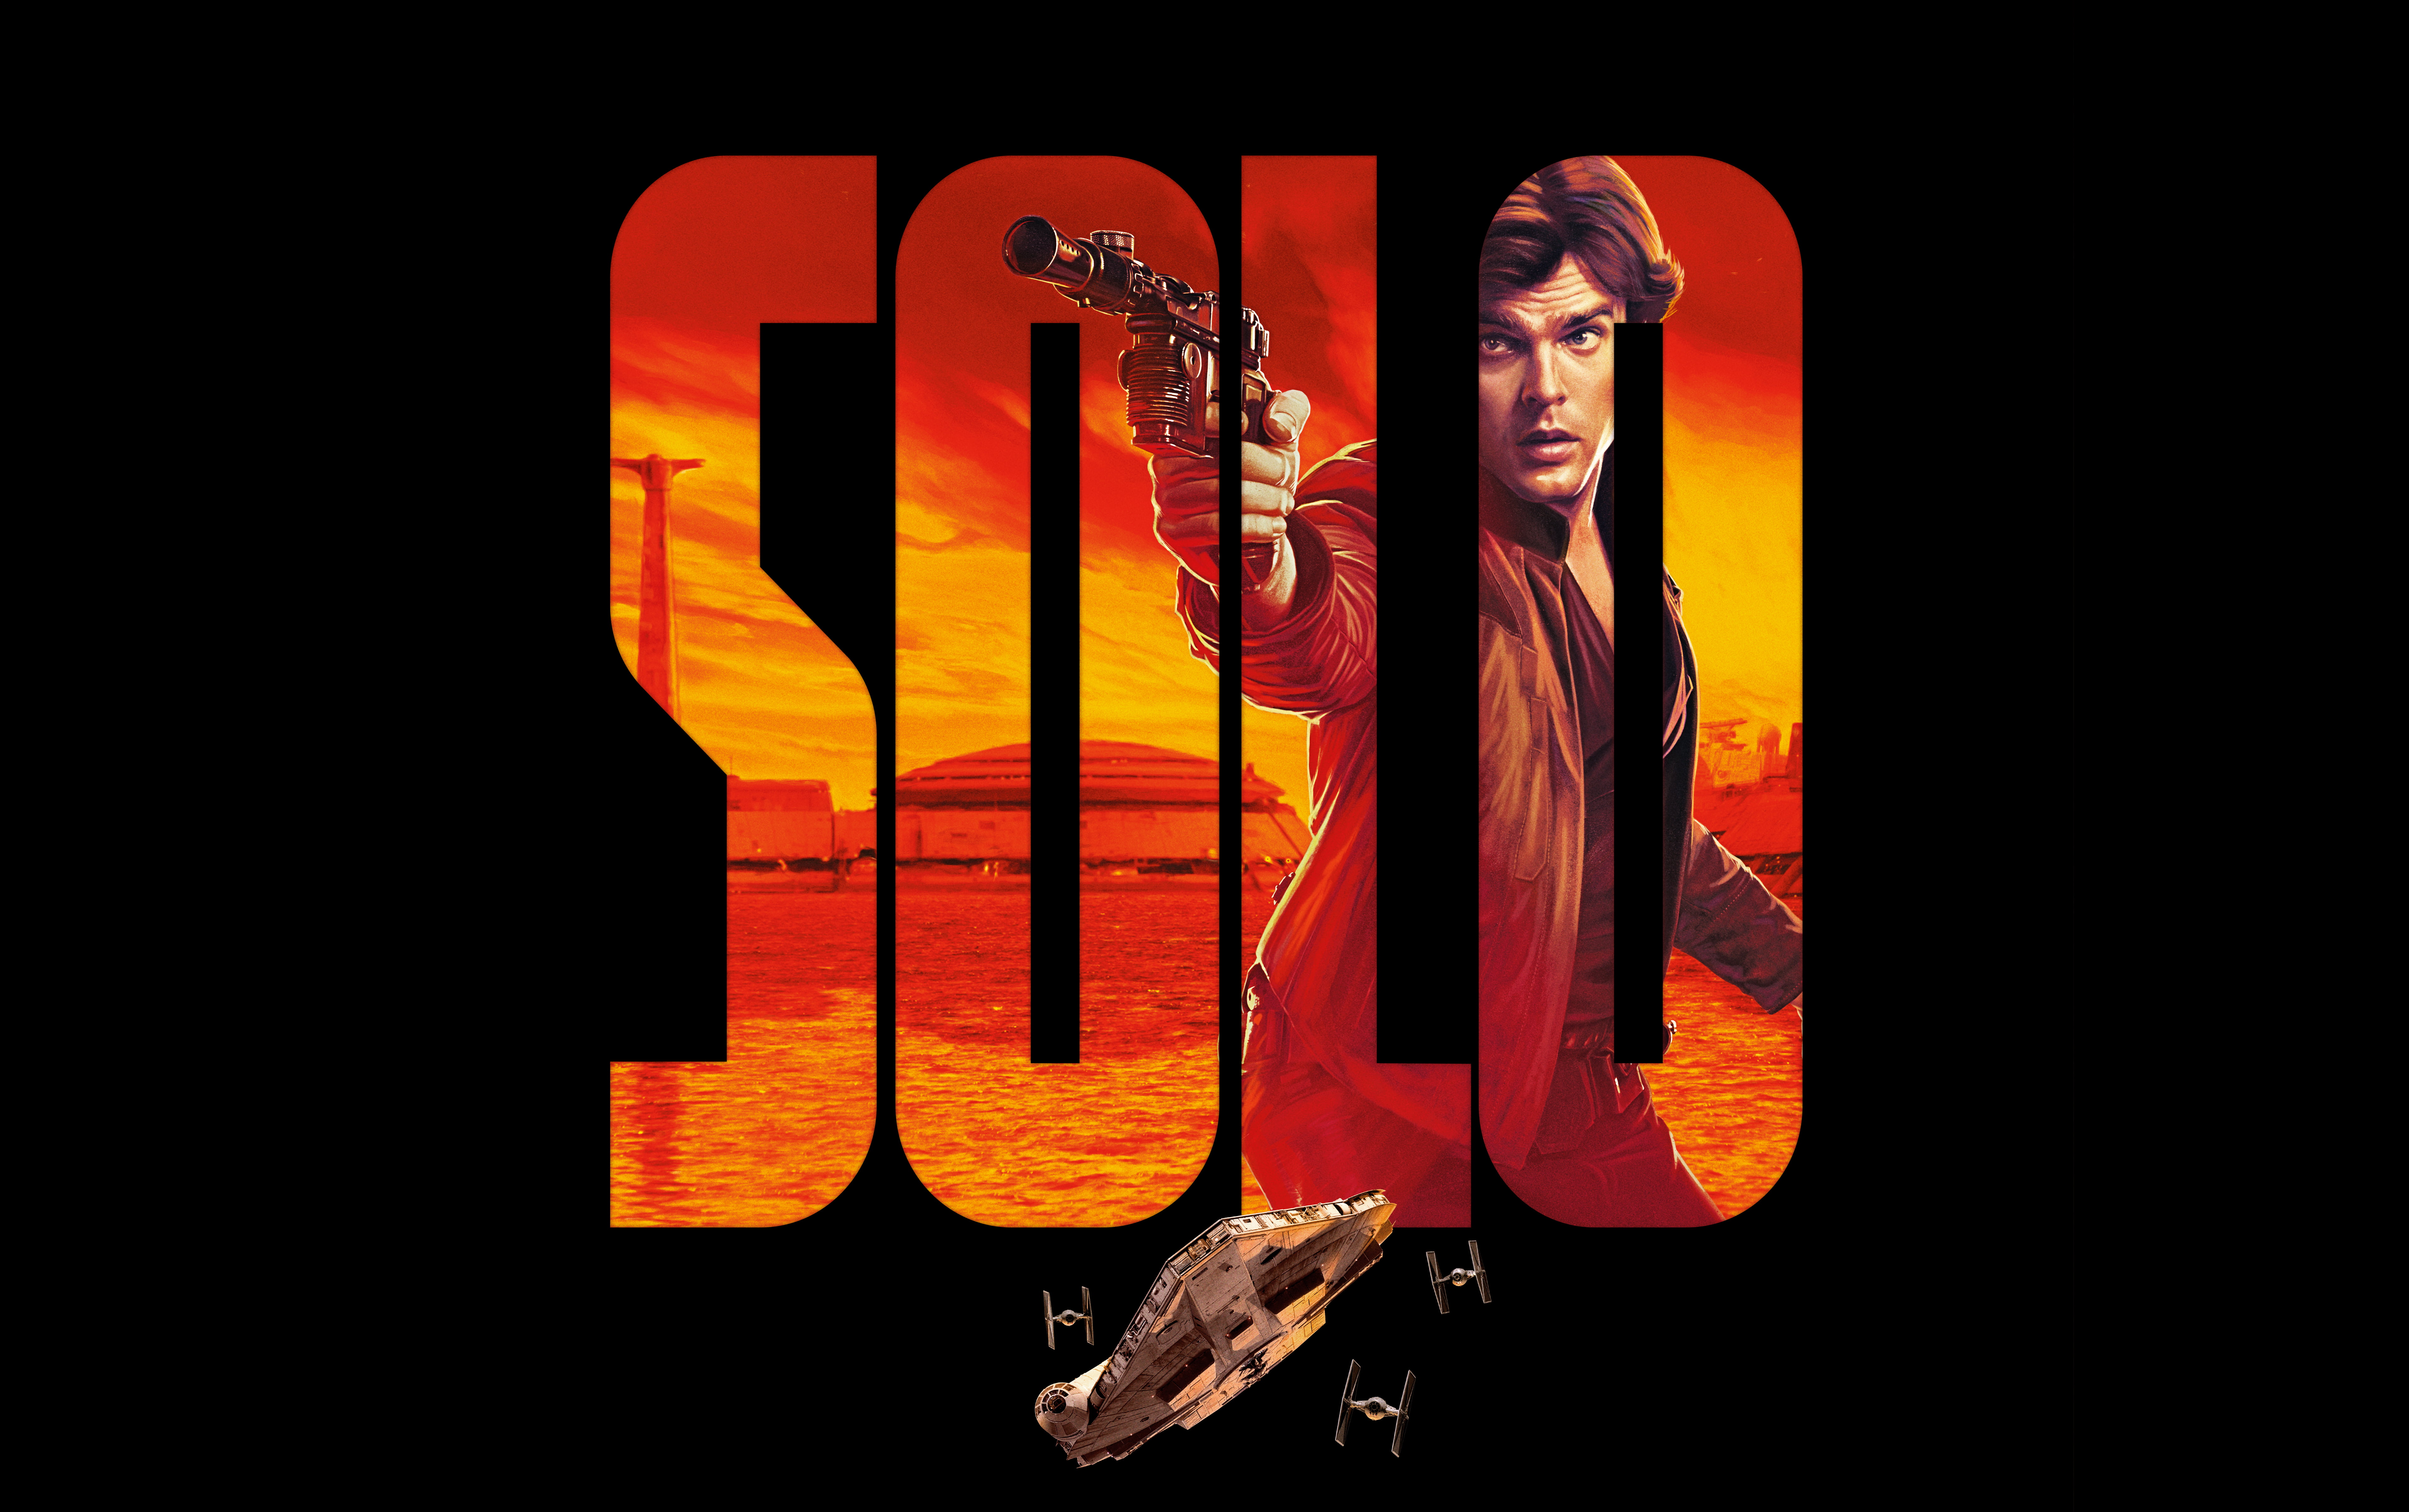 Solo Star Wars illustration